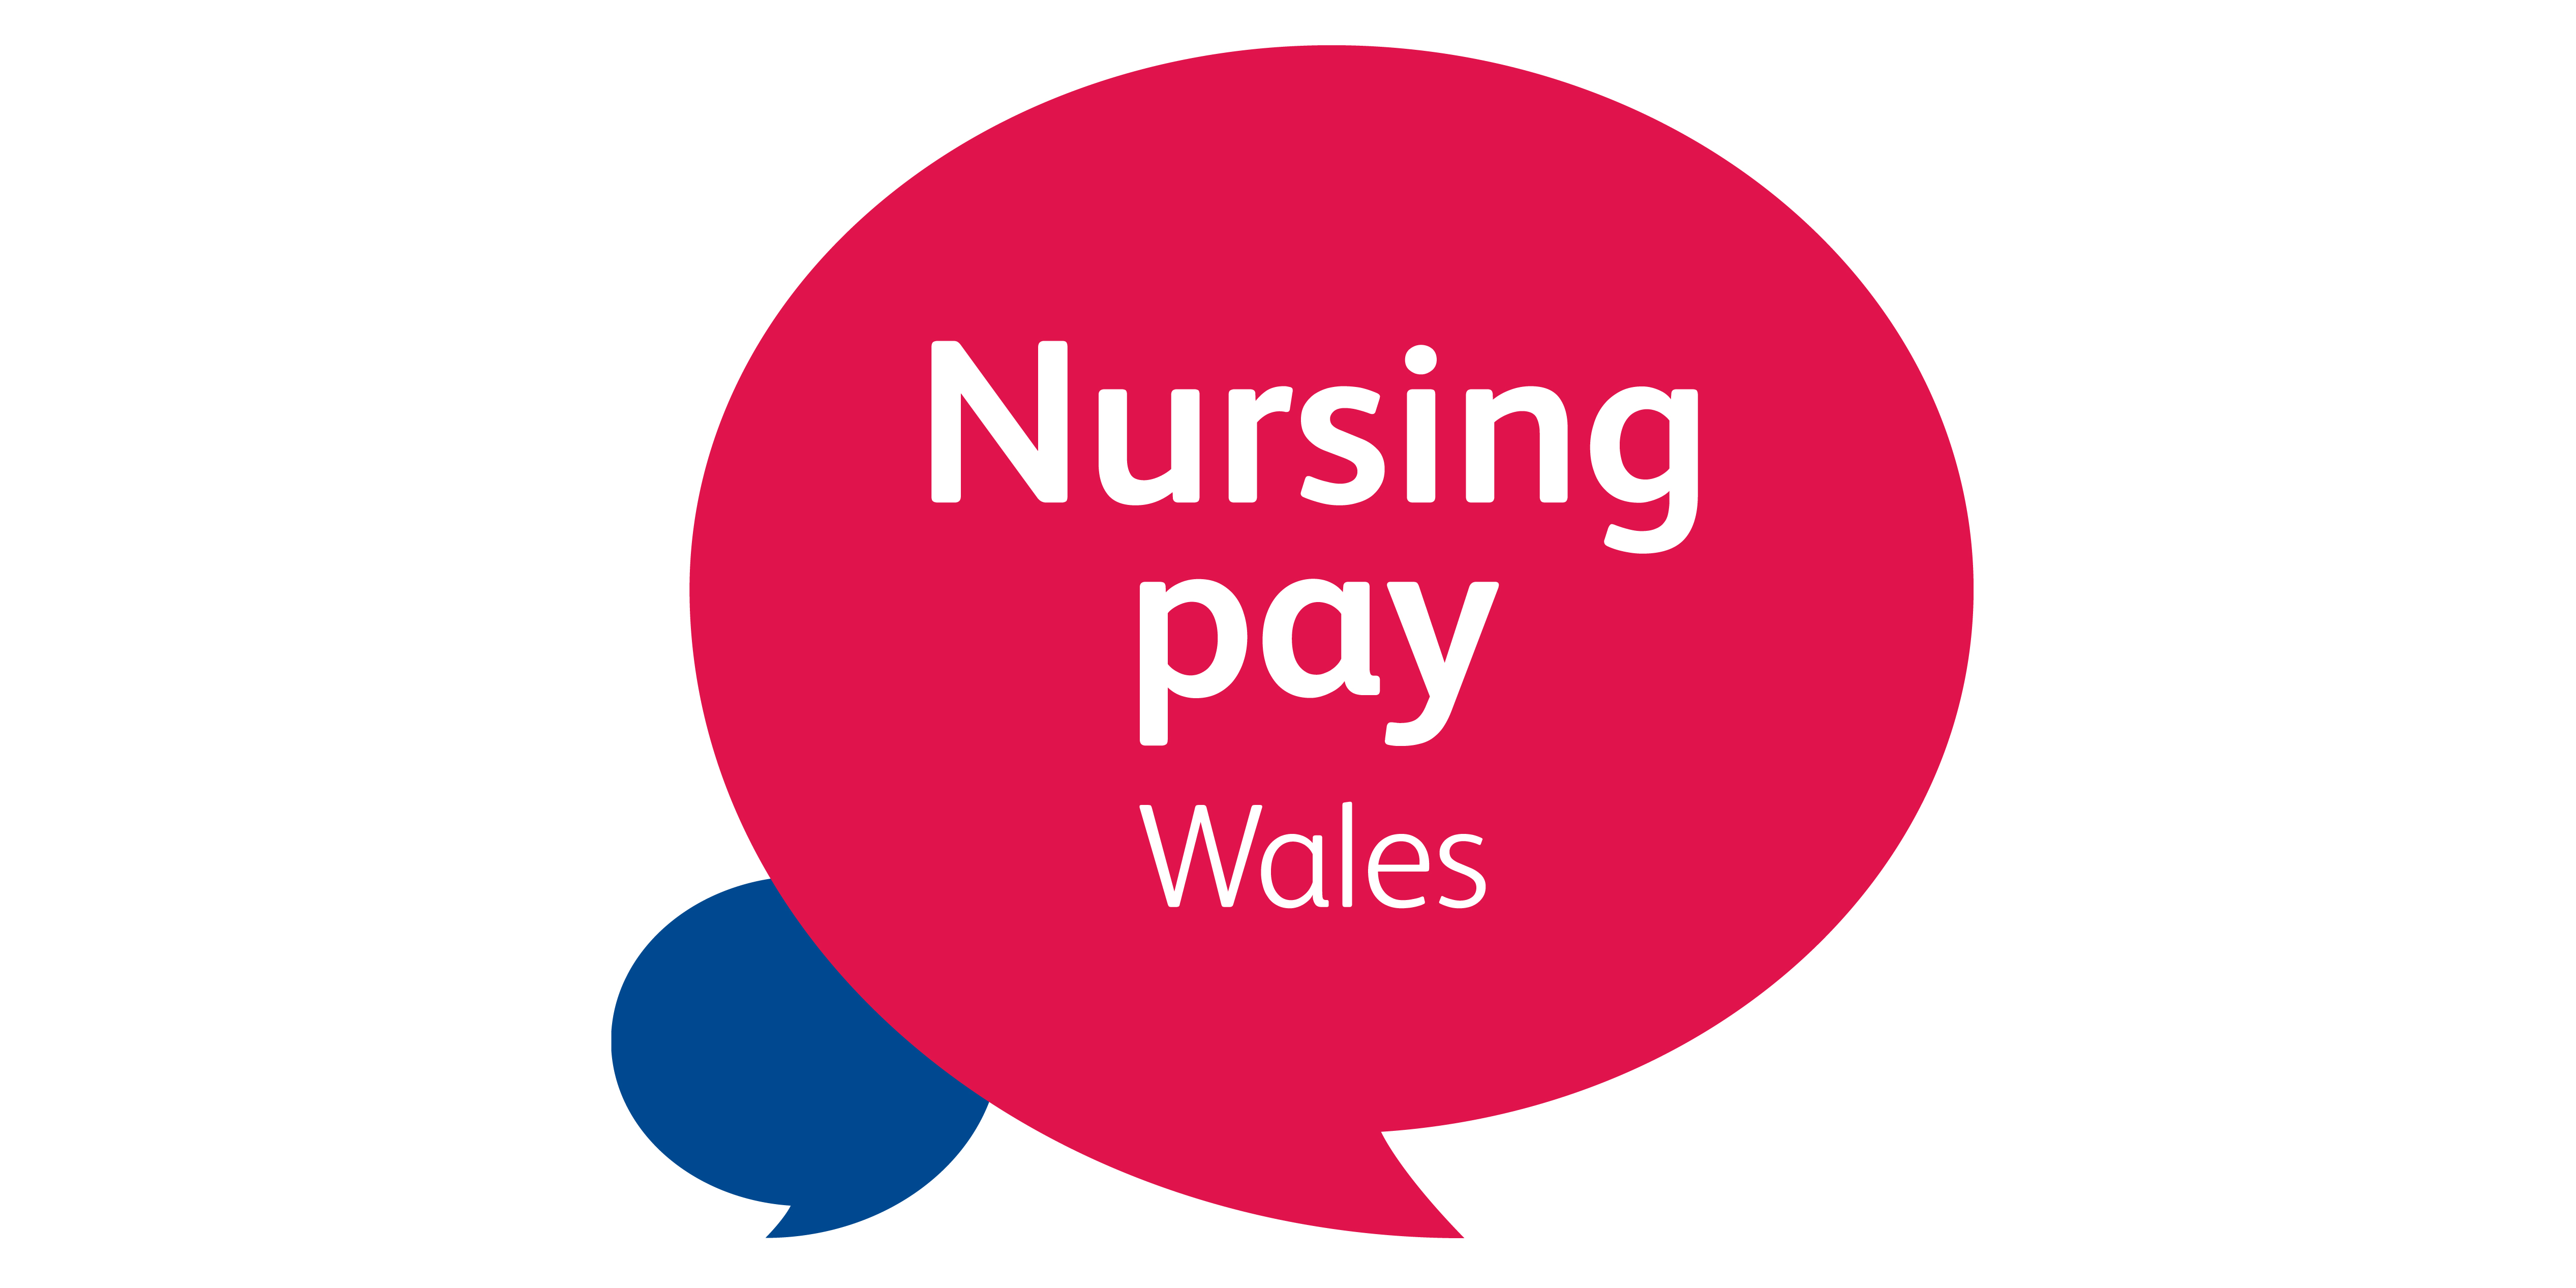 Nursing pay Wales